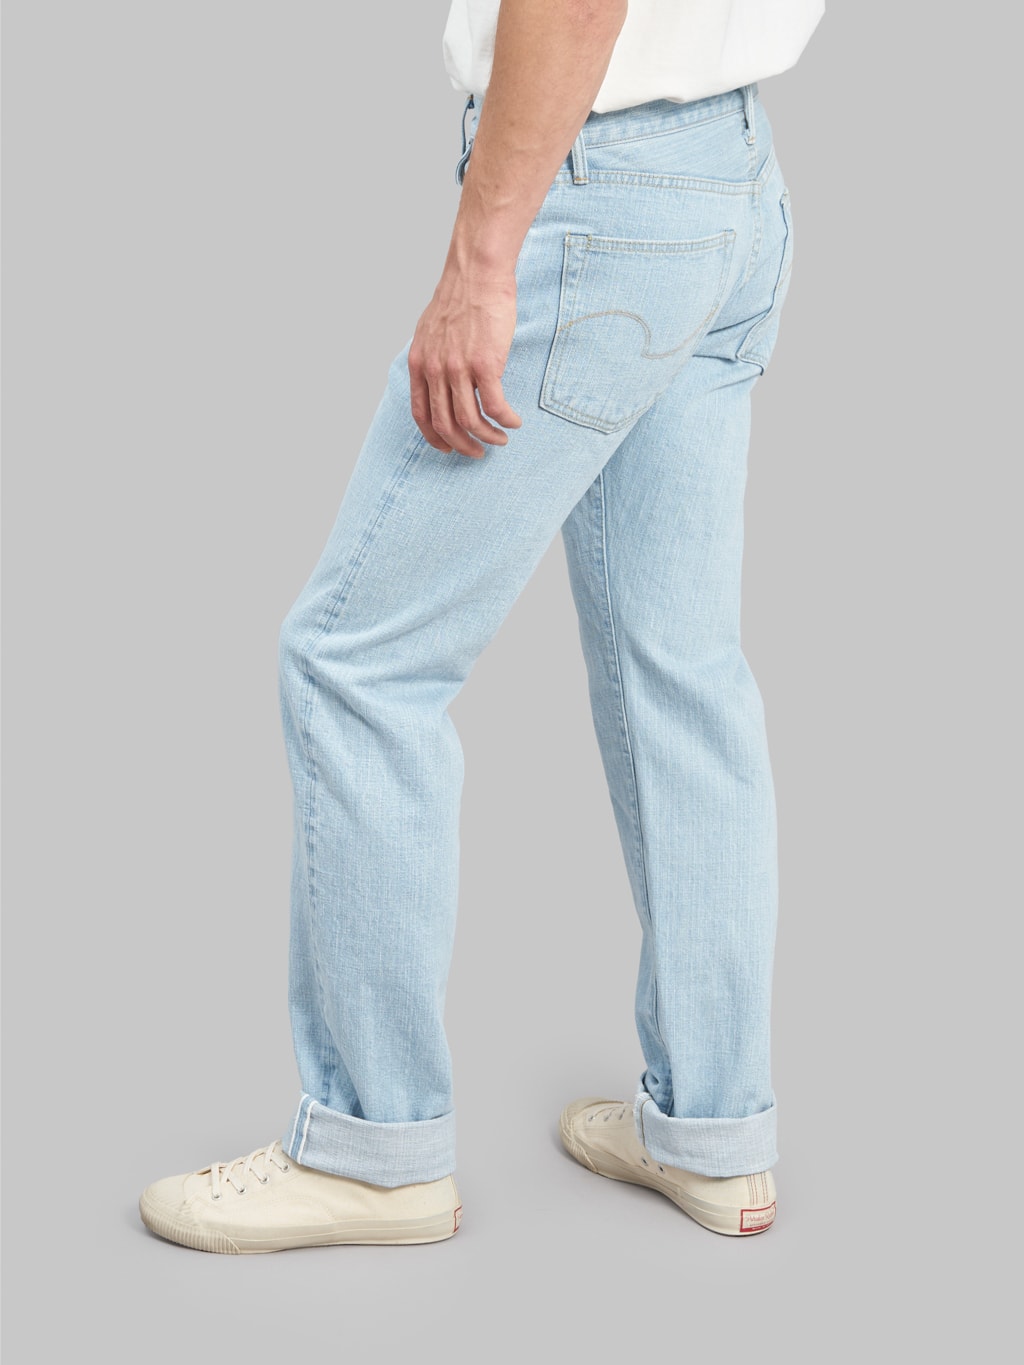 redcast heritage x oni denim kerama blue 15oz selvedge jeans fitting